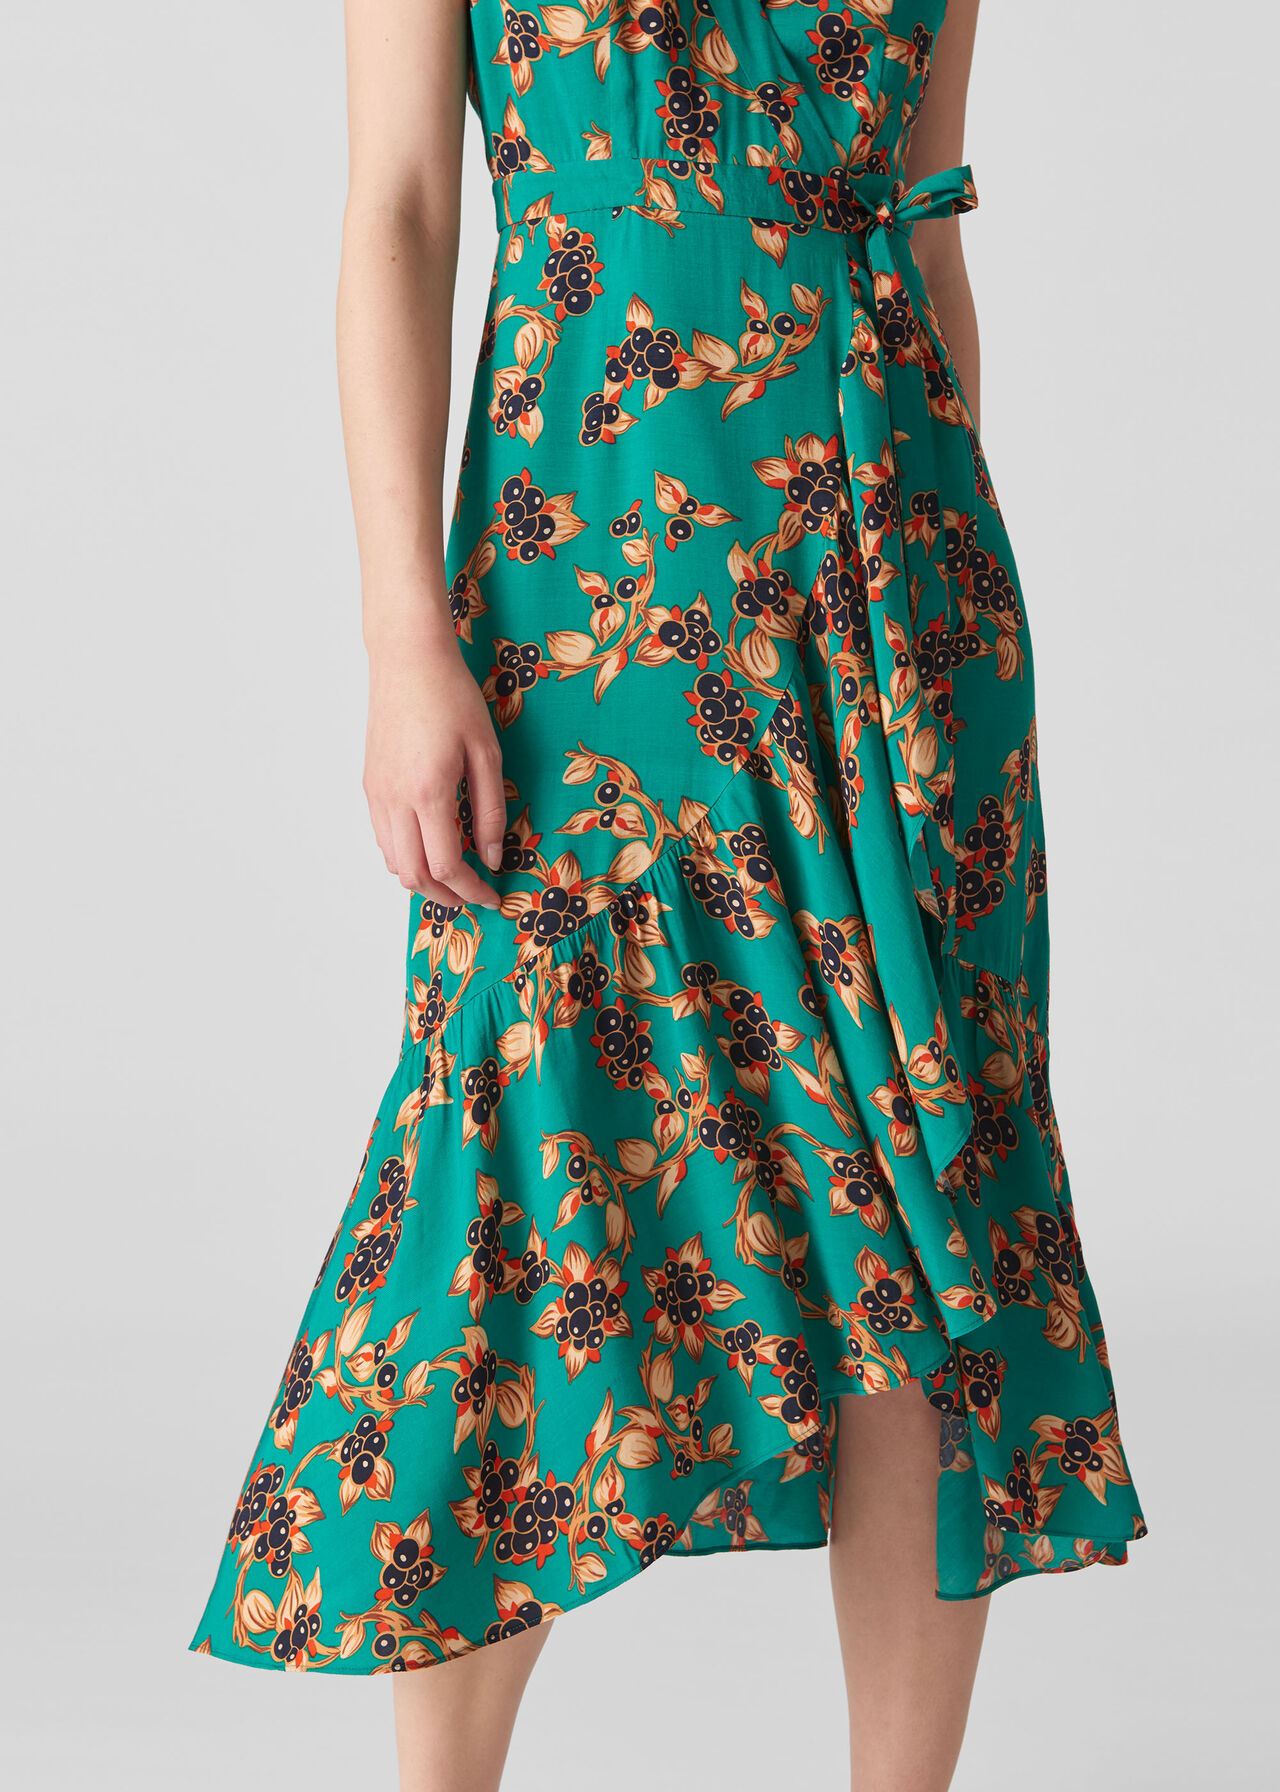 Capri Print Wrap Dress Green/Multi